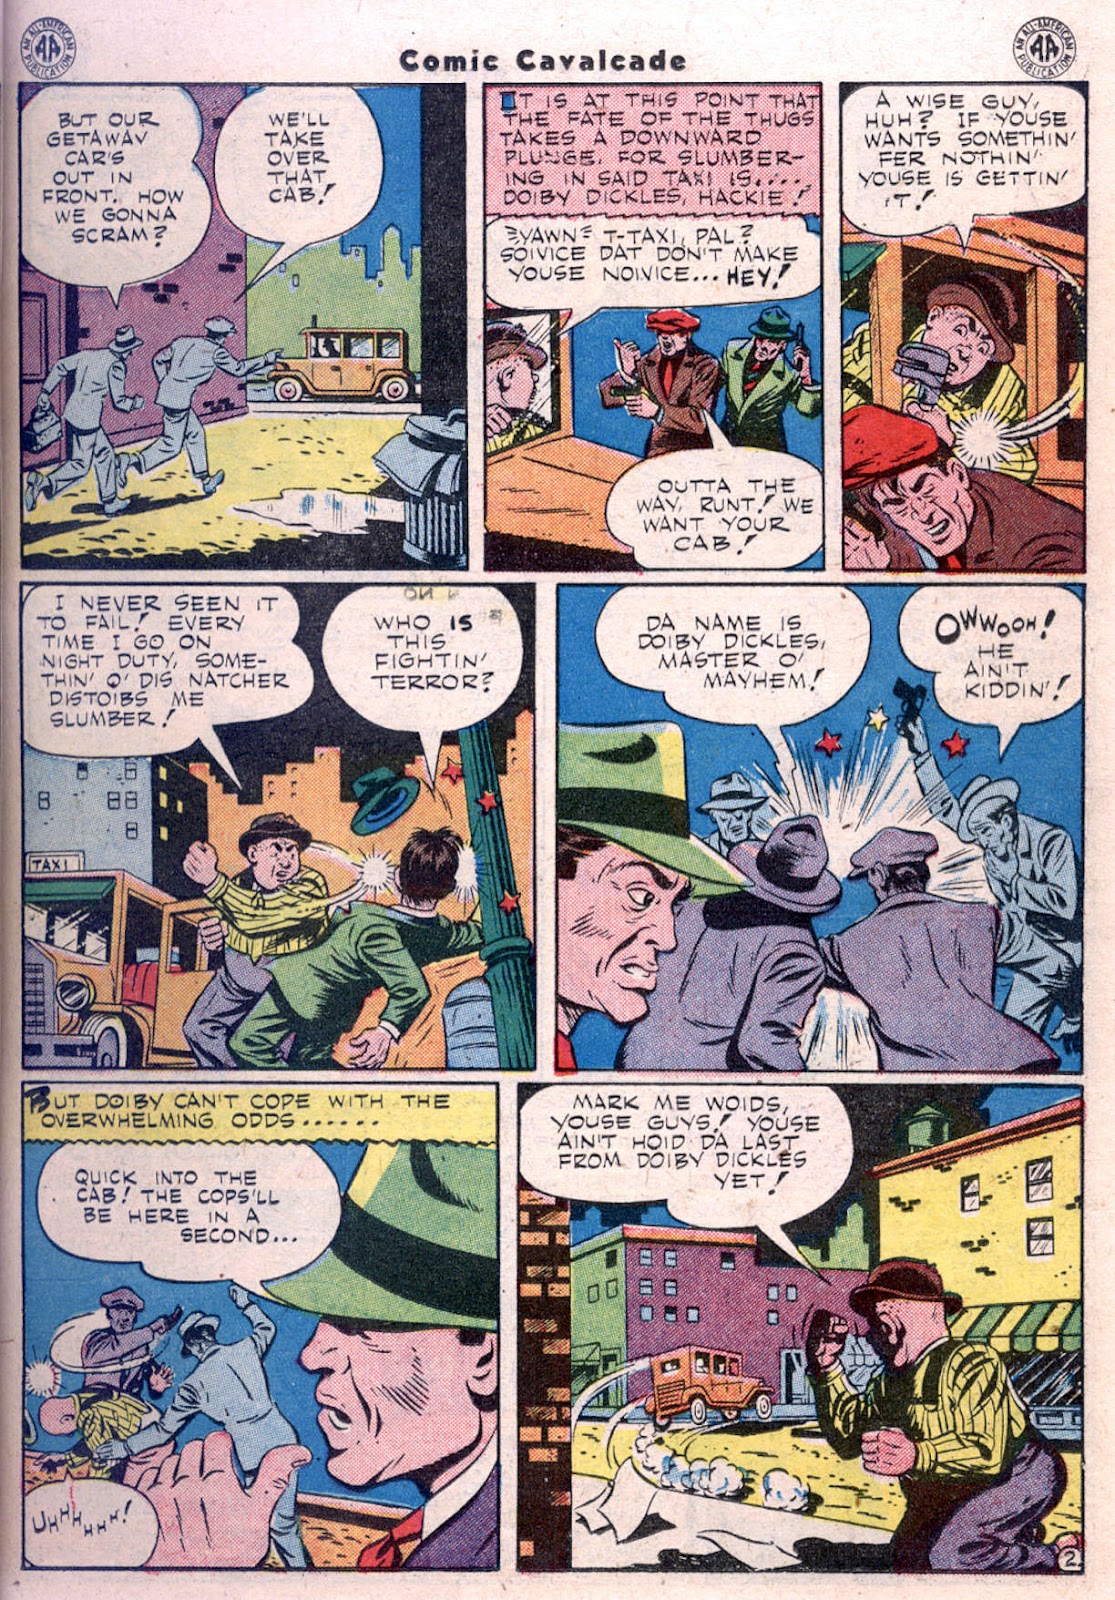 Comic Cavalcade issue 11 - Page 21